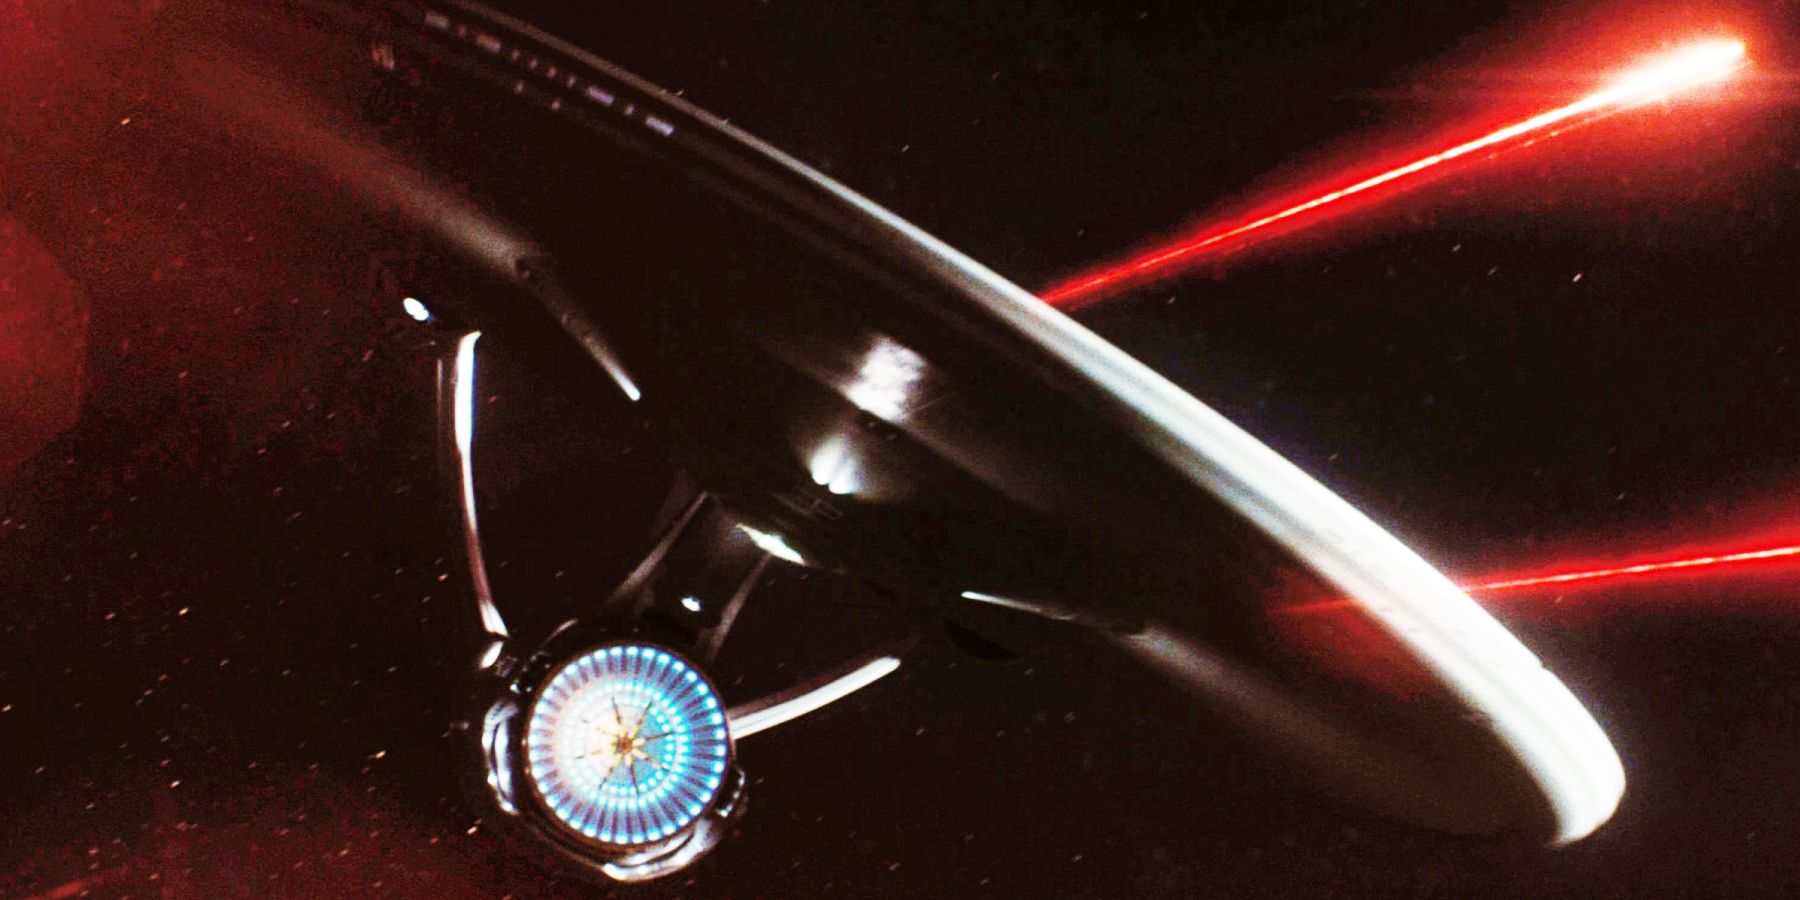 J.J. Abrams Star Trek Reboot Was Better Than A Rejected Starfleet War Movie Idea